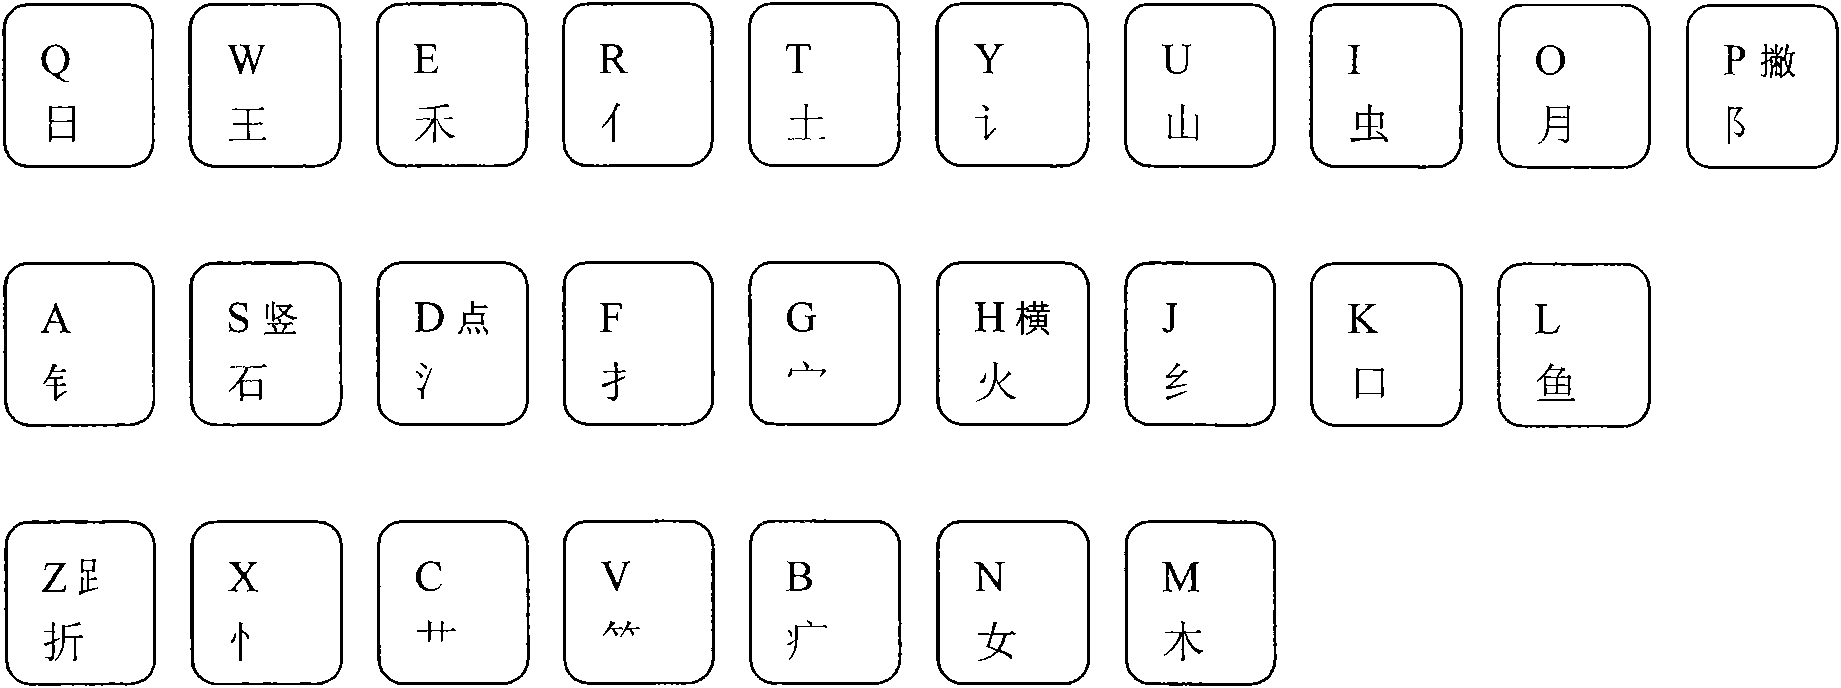 Shape code input method based on Chinese character codes